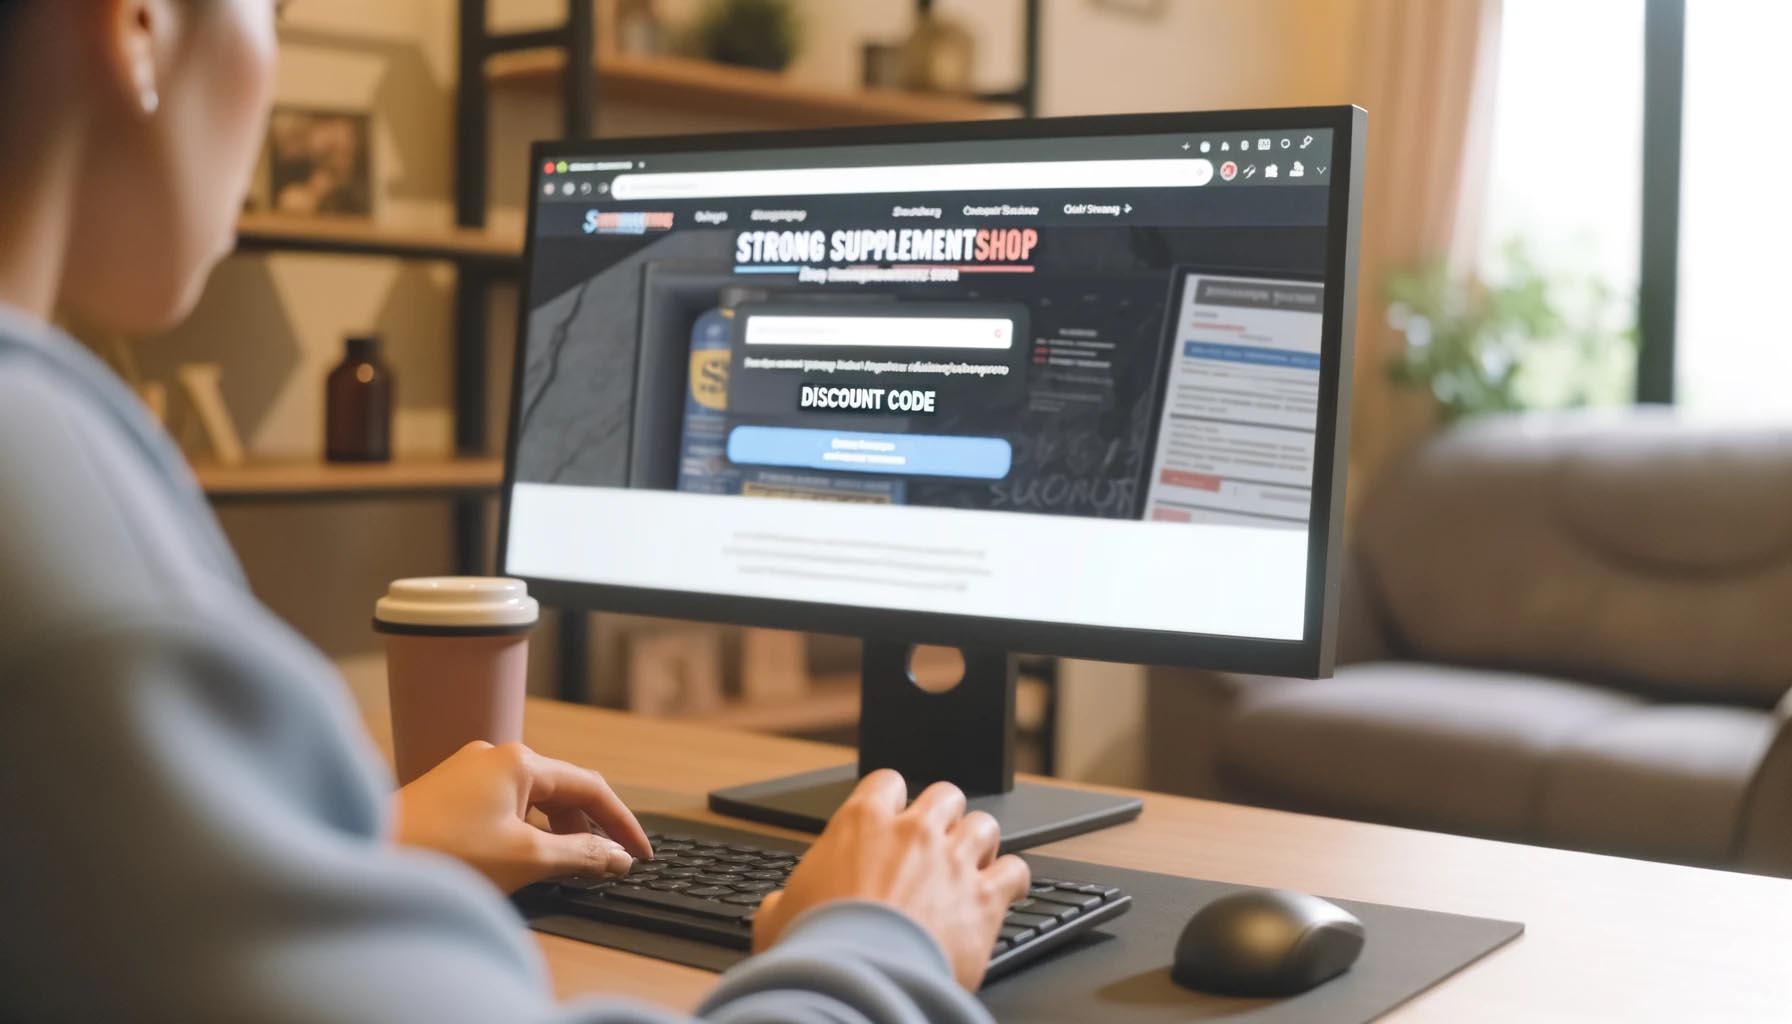 A customer applying a discount code on the StrongSupplementShop.com website.